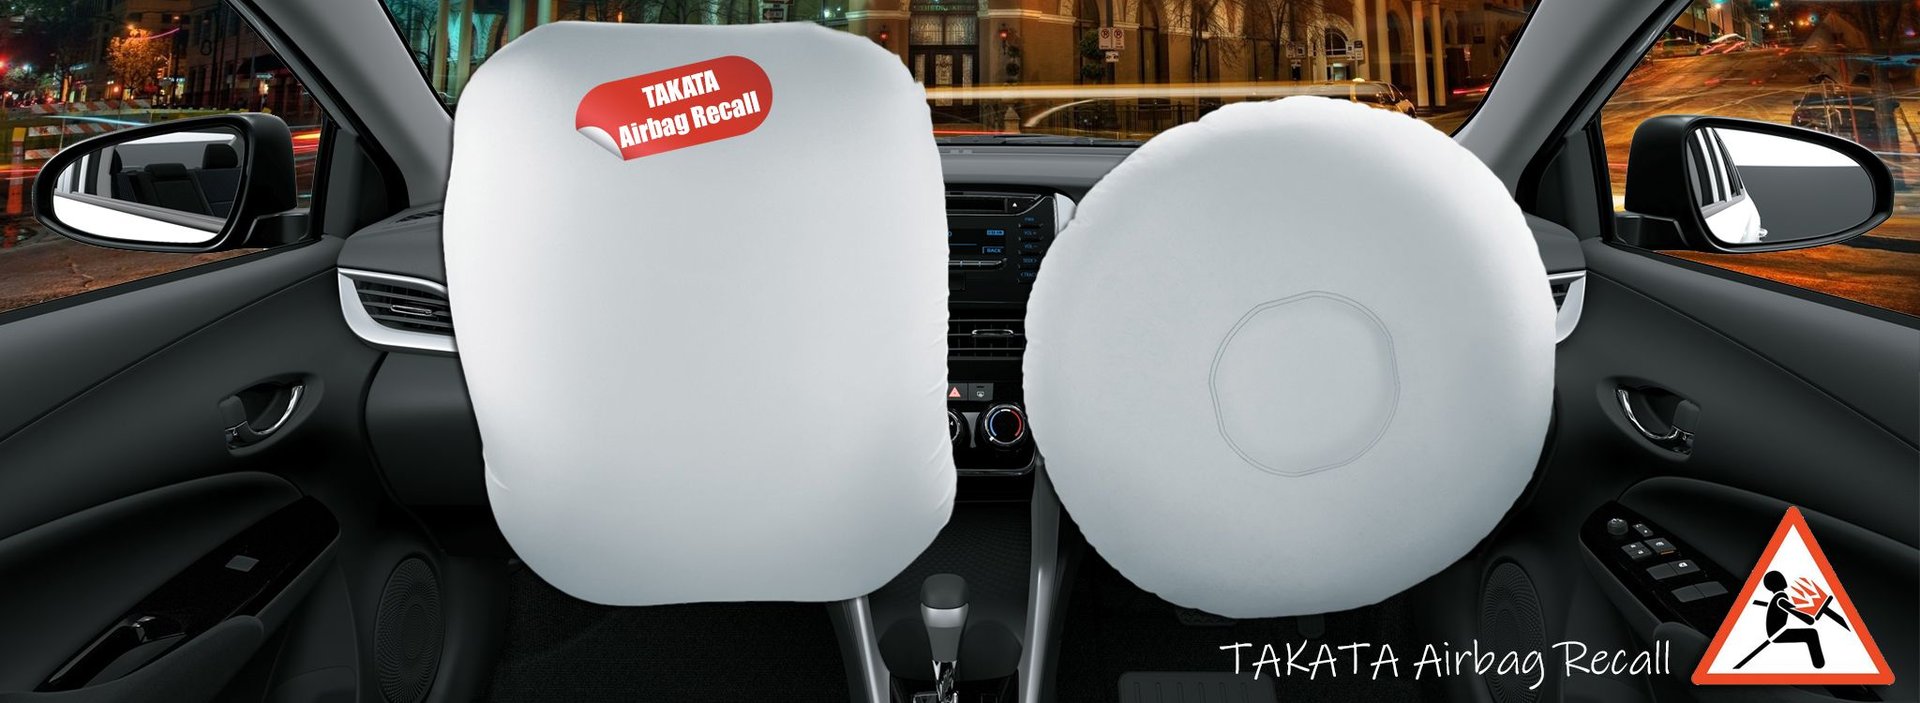 takata-airbag-recall-web-slide-1.jpg